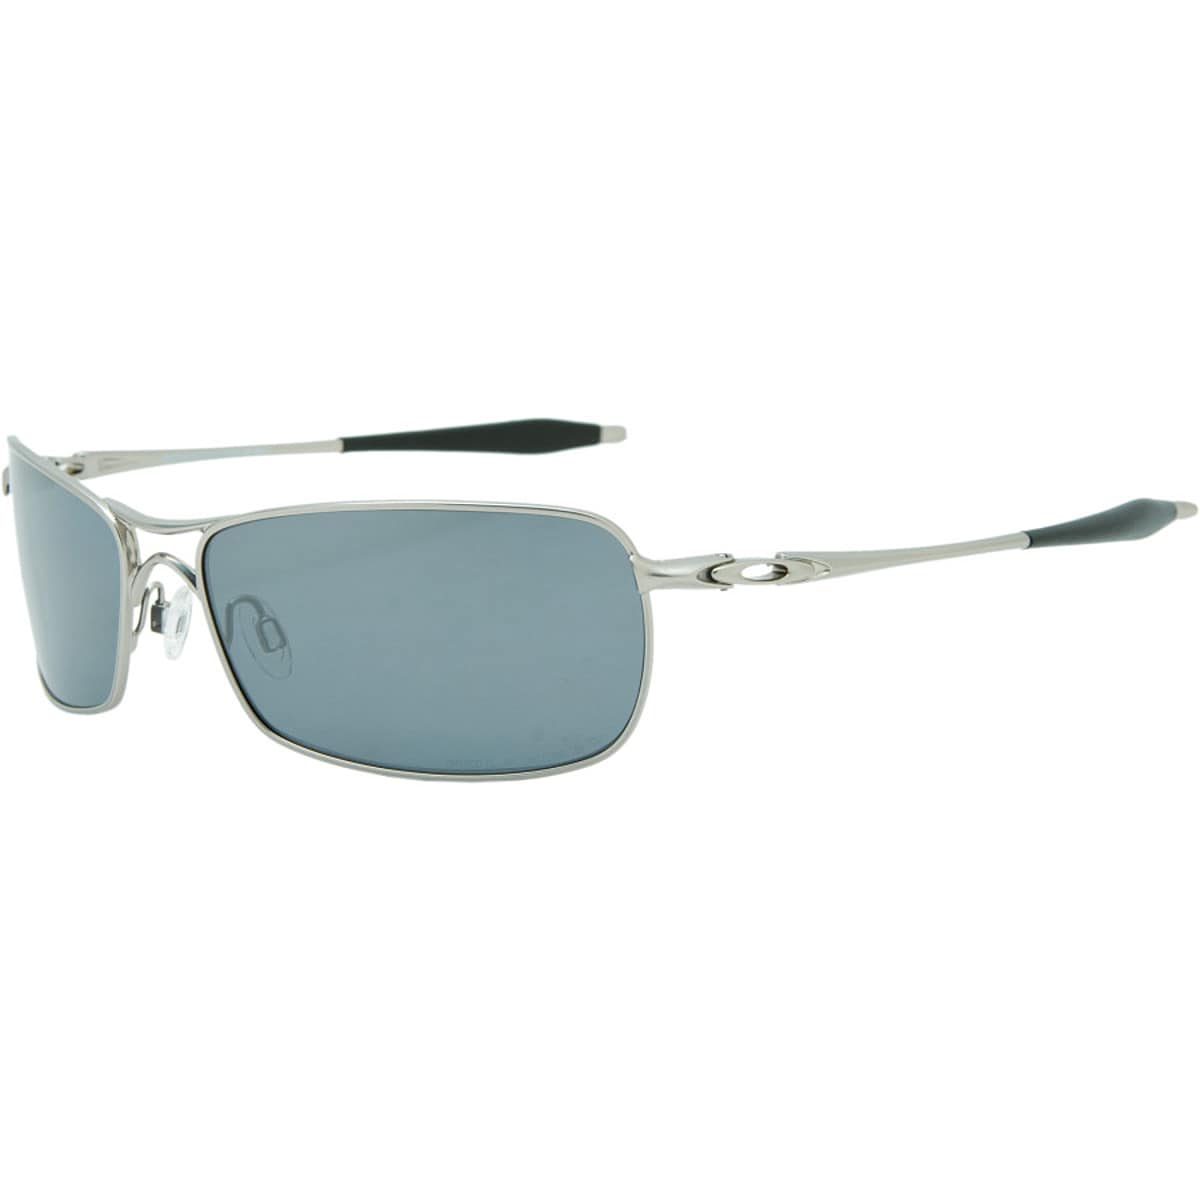 Oakley Crosshair  Polarized Sunglasses - Accessories